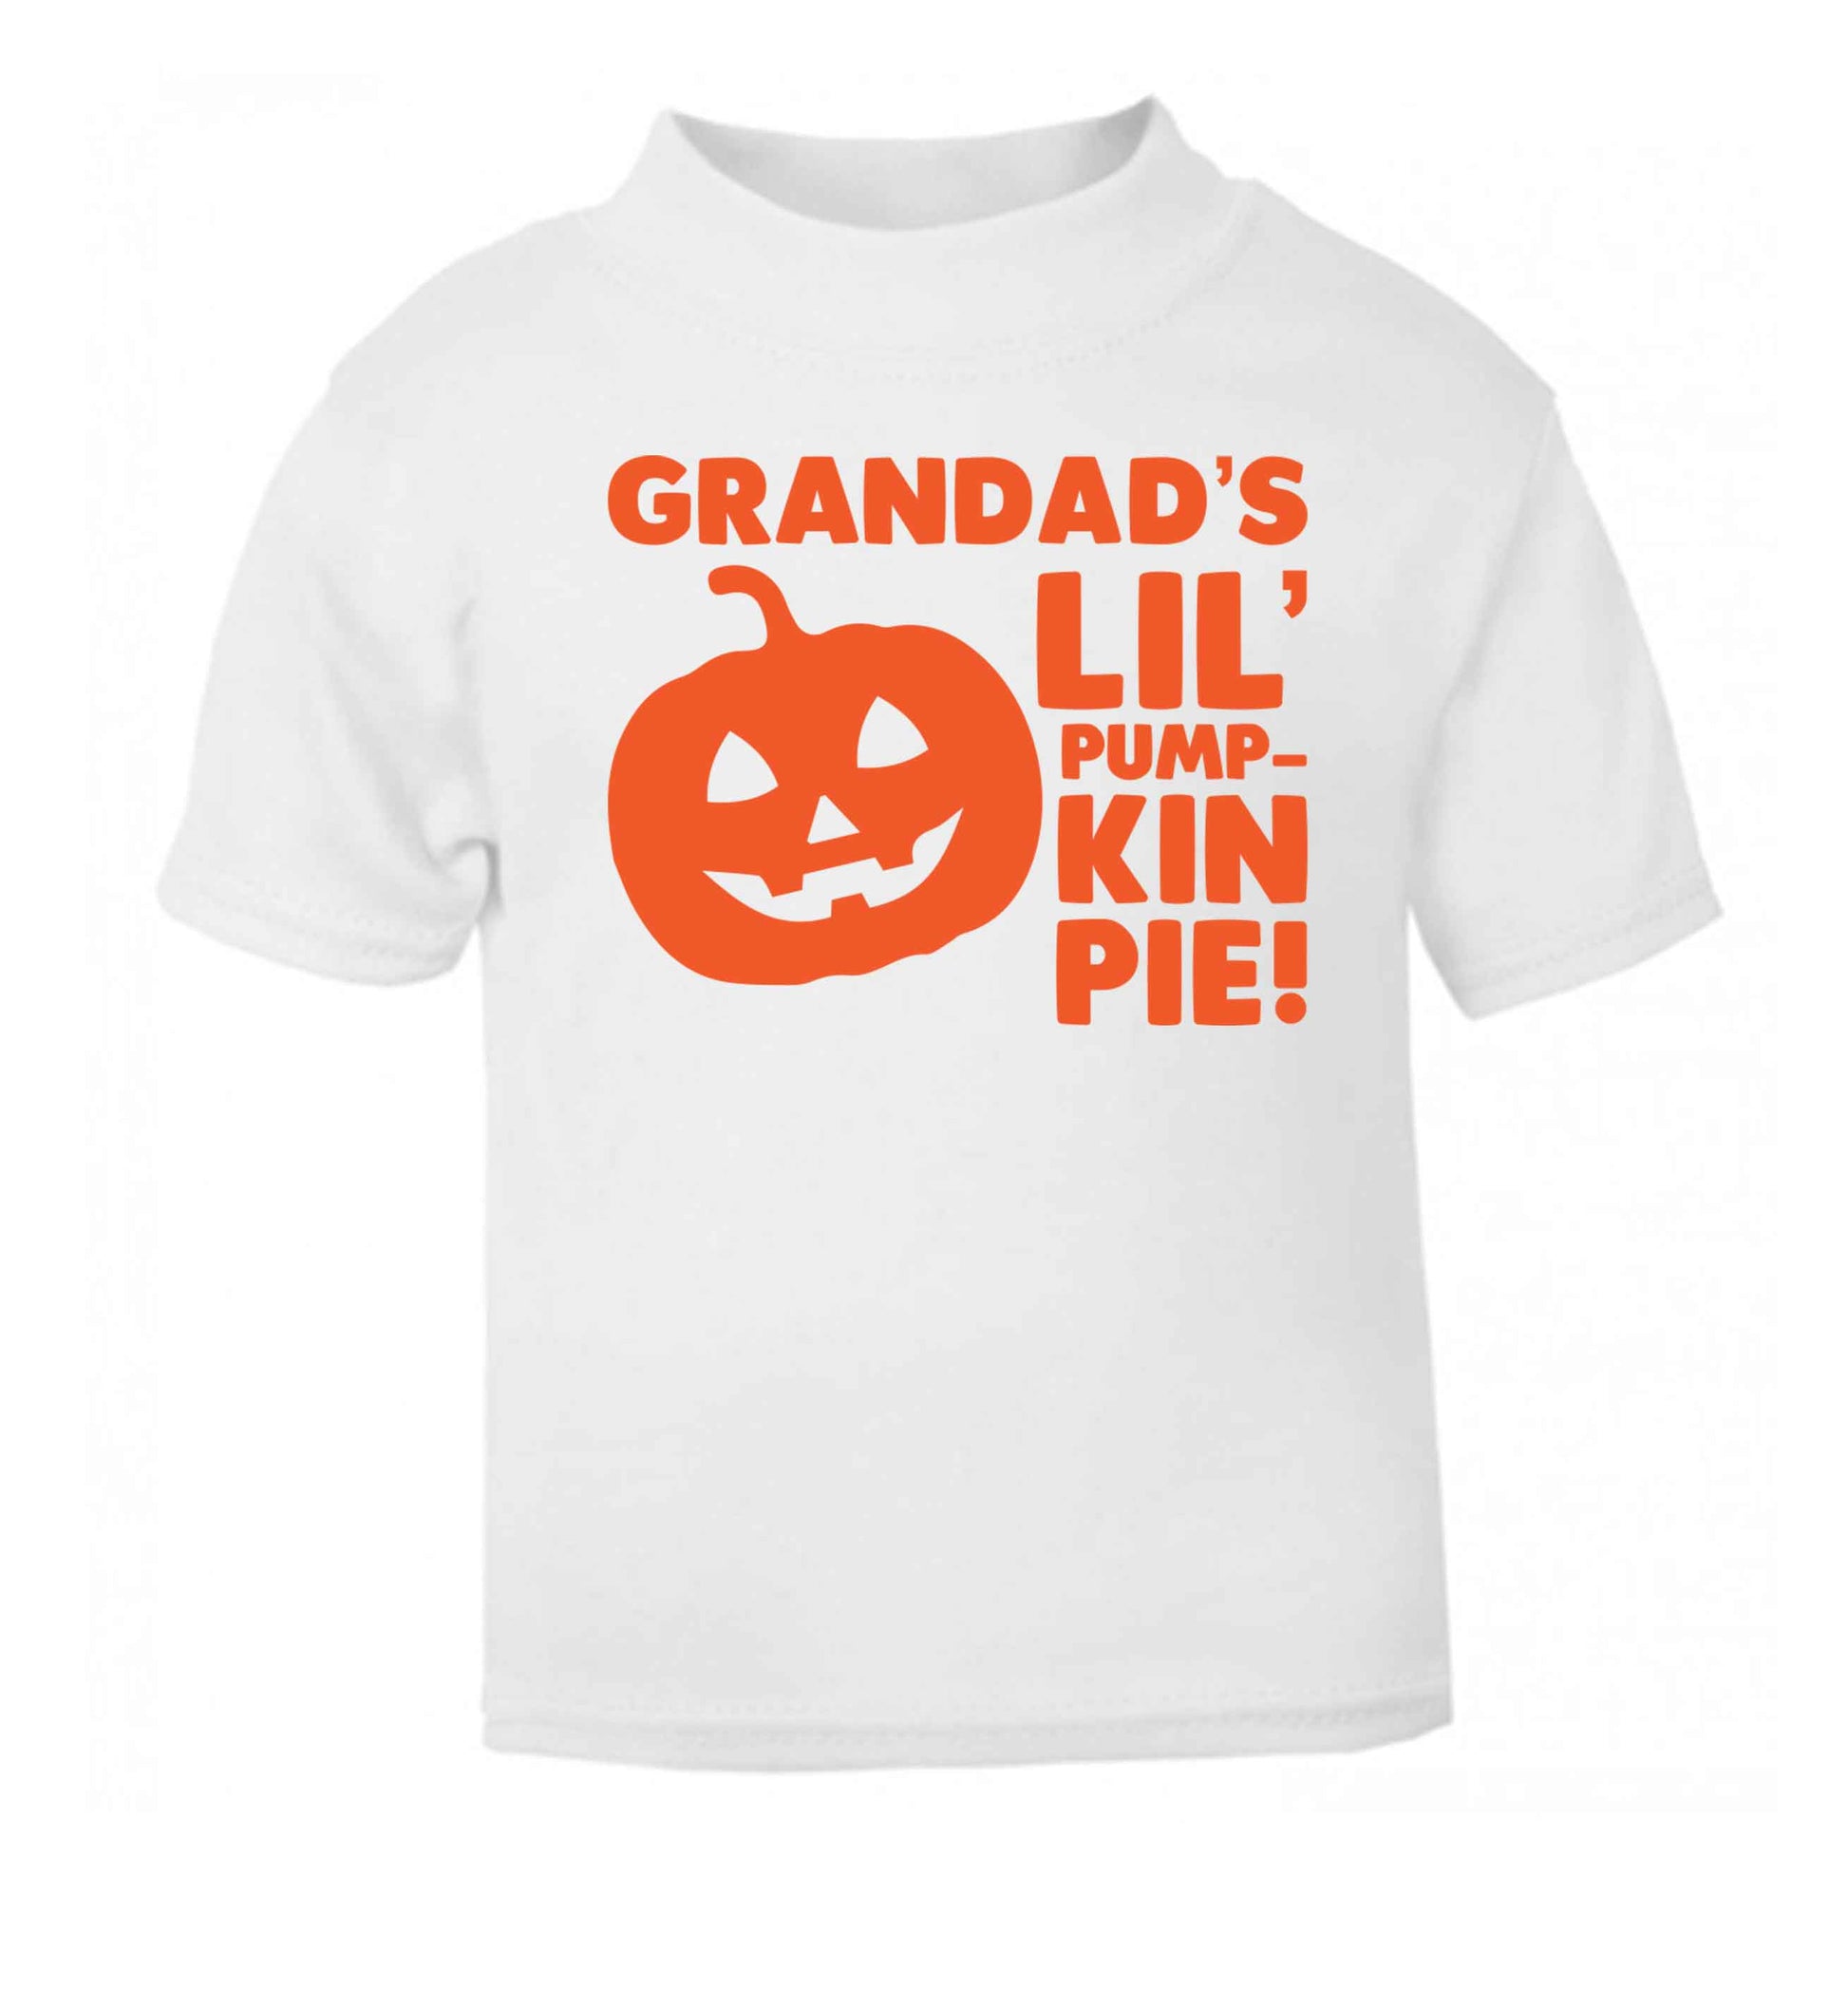 Grandad's lil' pumpkin pie white baby toddler Tshirt 2 Years